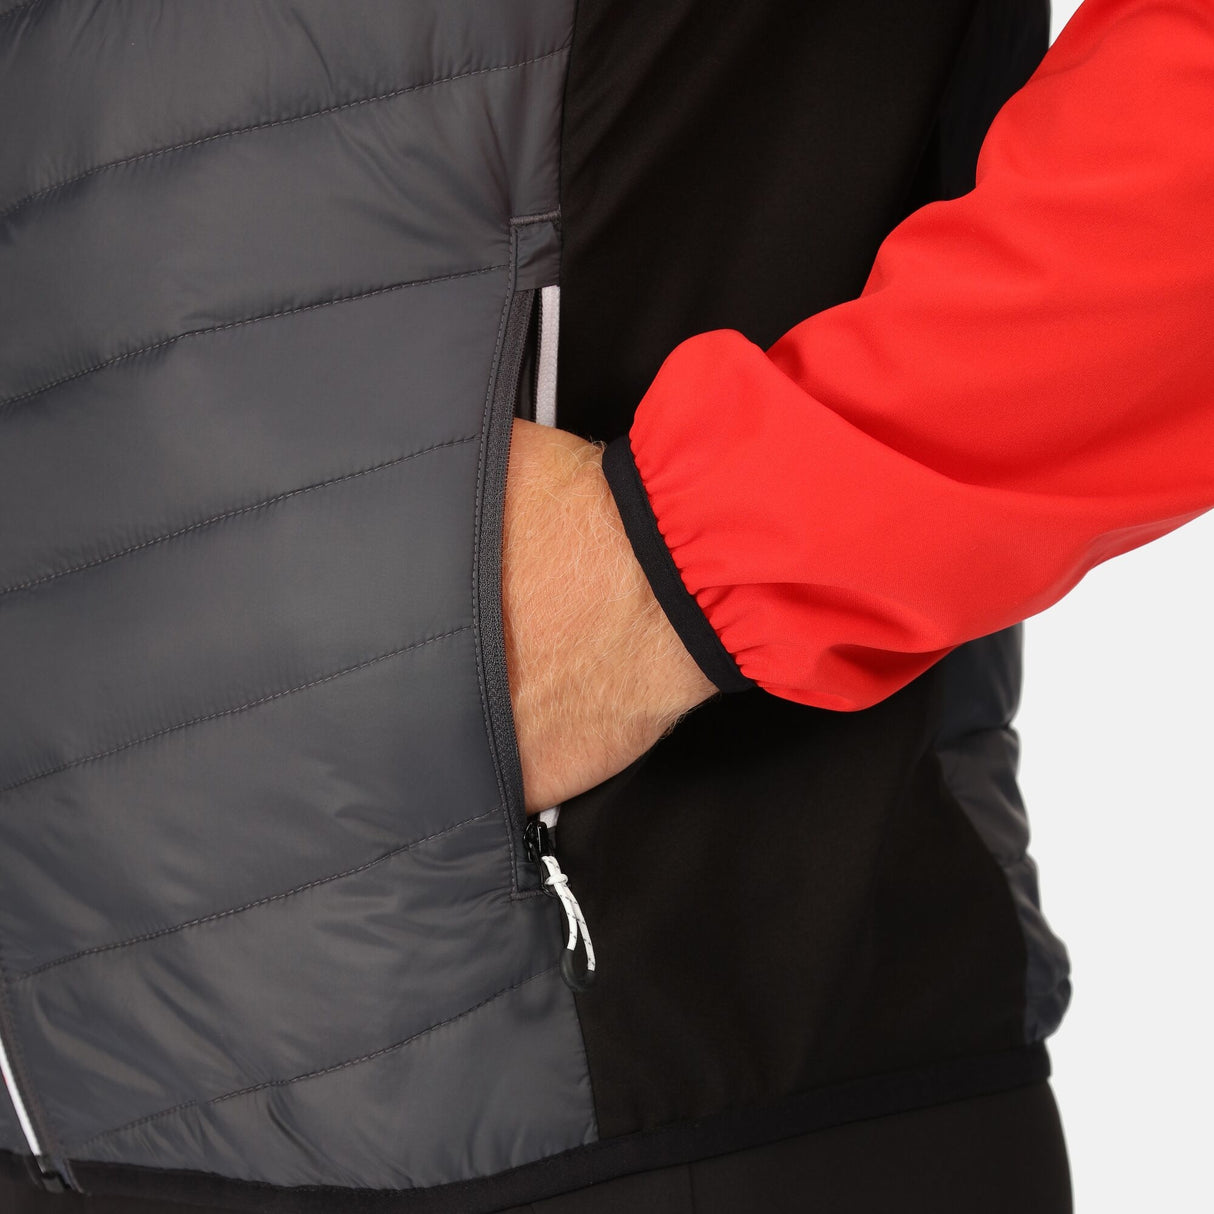 Regatta Men's Steren Hybrid Full Zip Softshell Jacket